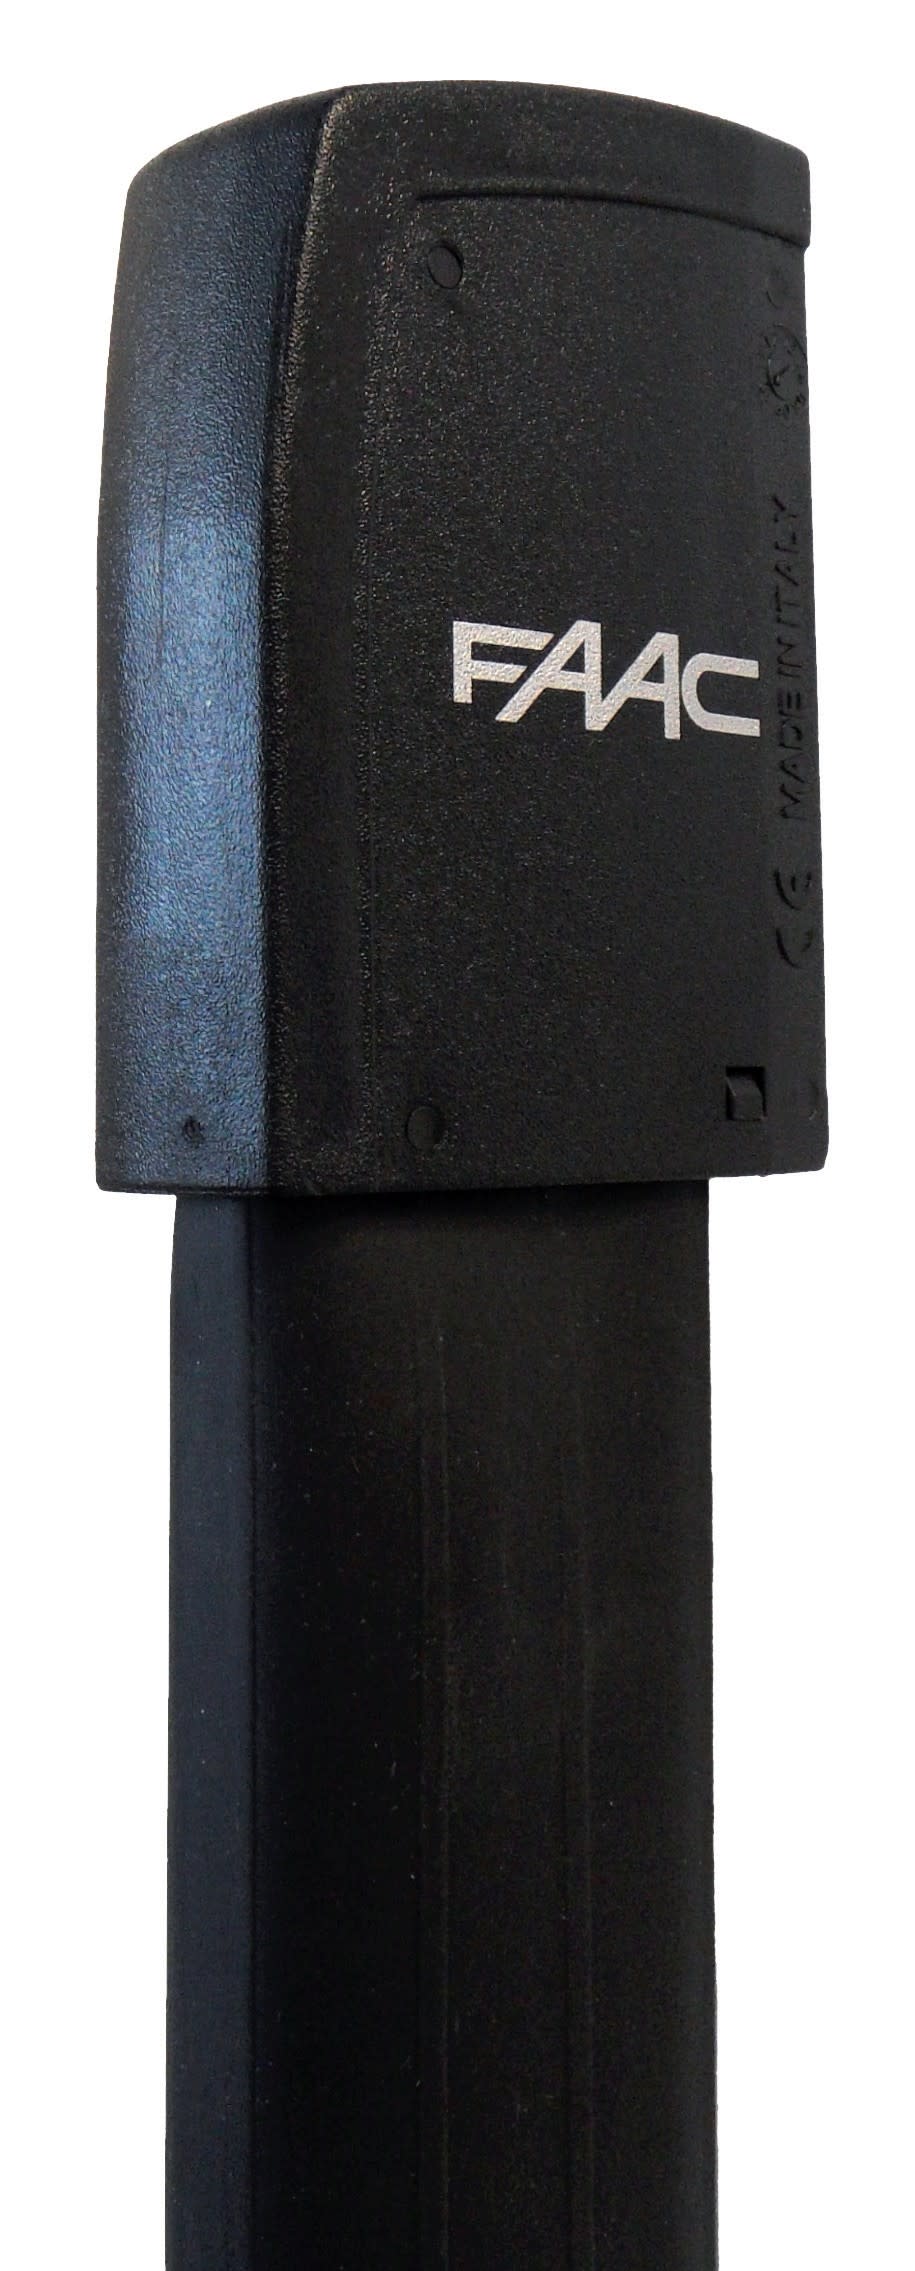 Faac - bord securite - m60 (l=2 m). tranche de securite electromecanique a cable